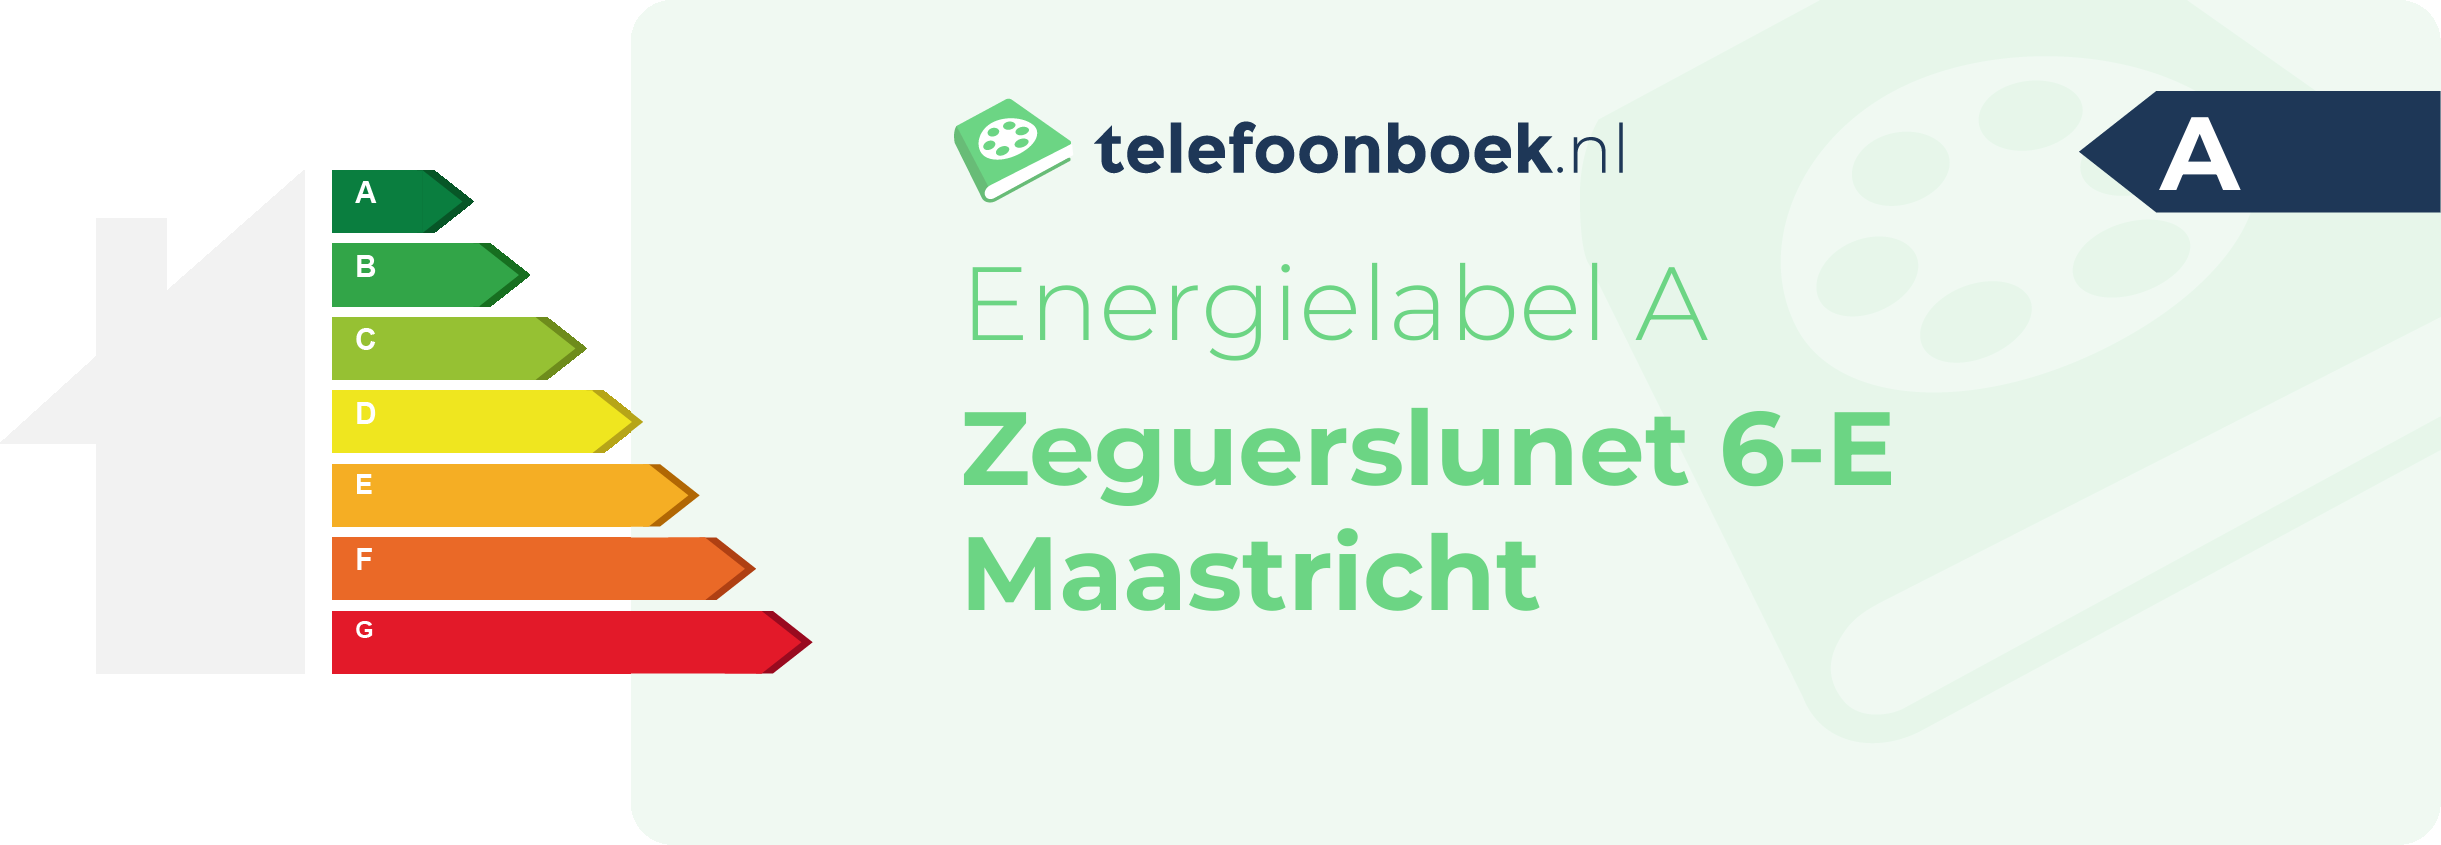 Energielabel Zeguerslunet 6-E Maastricht